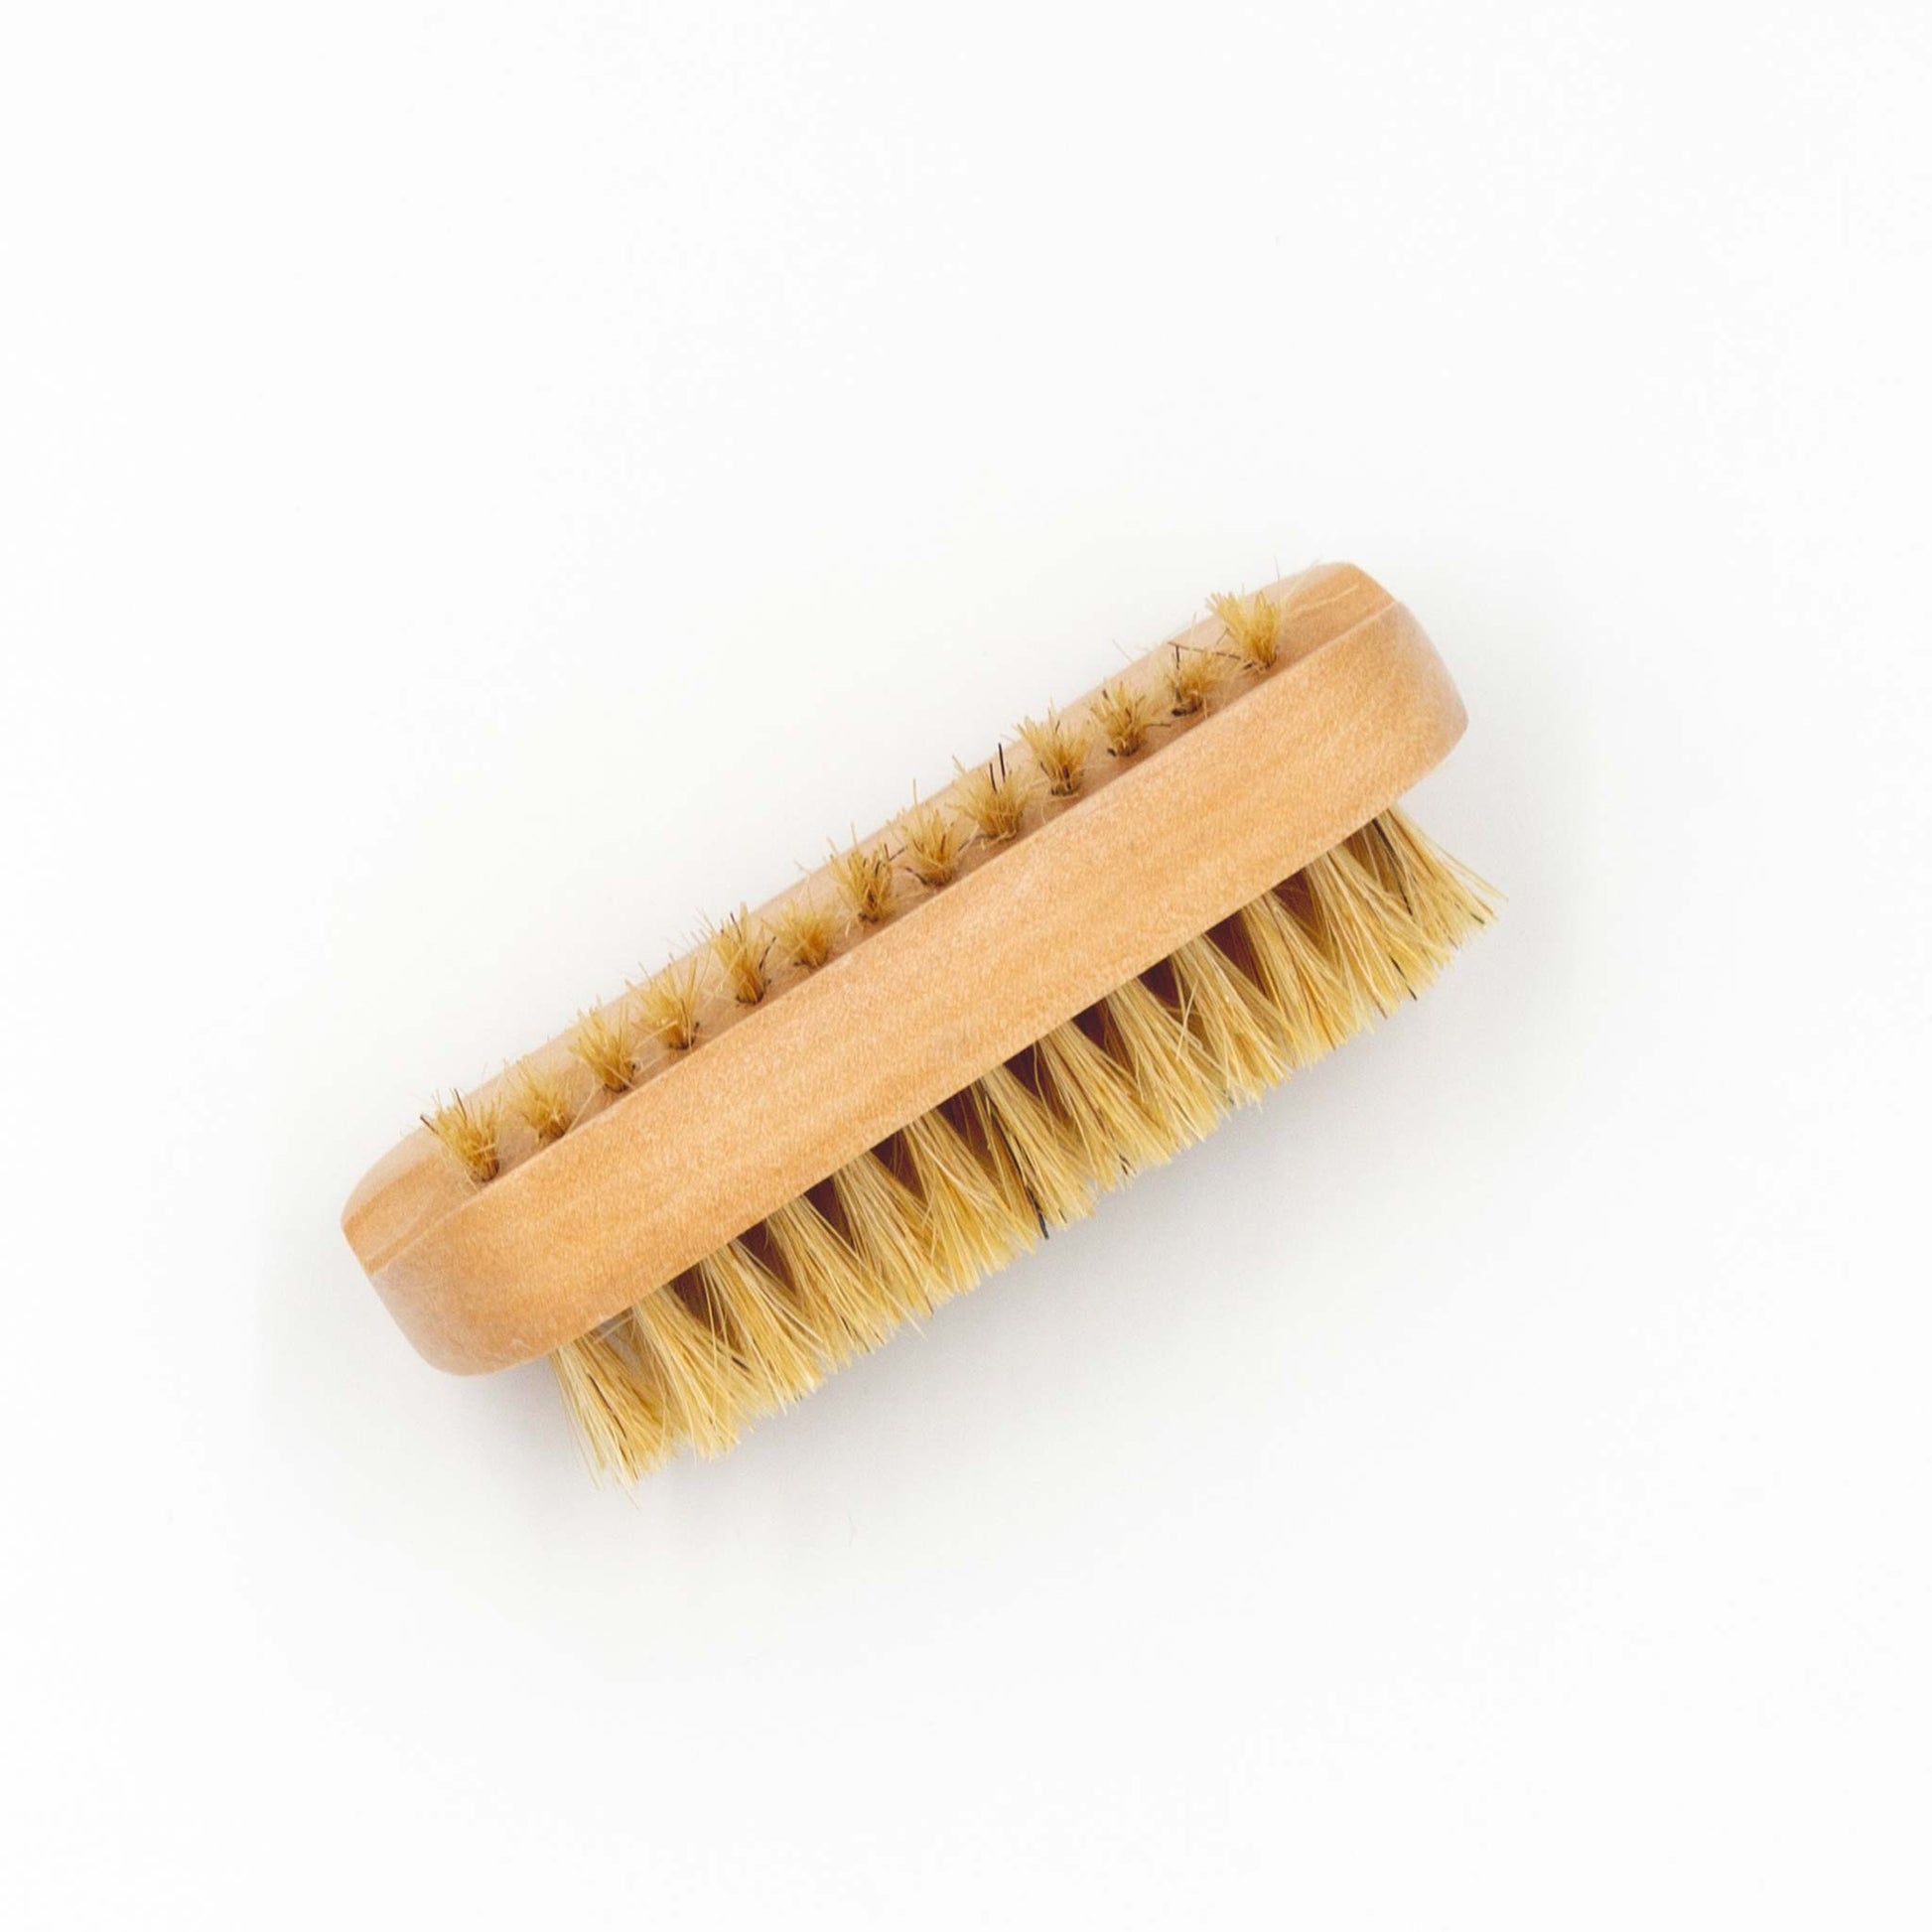 Wooden hotel nail brush with natural bristles